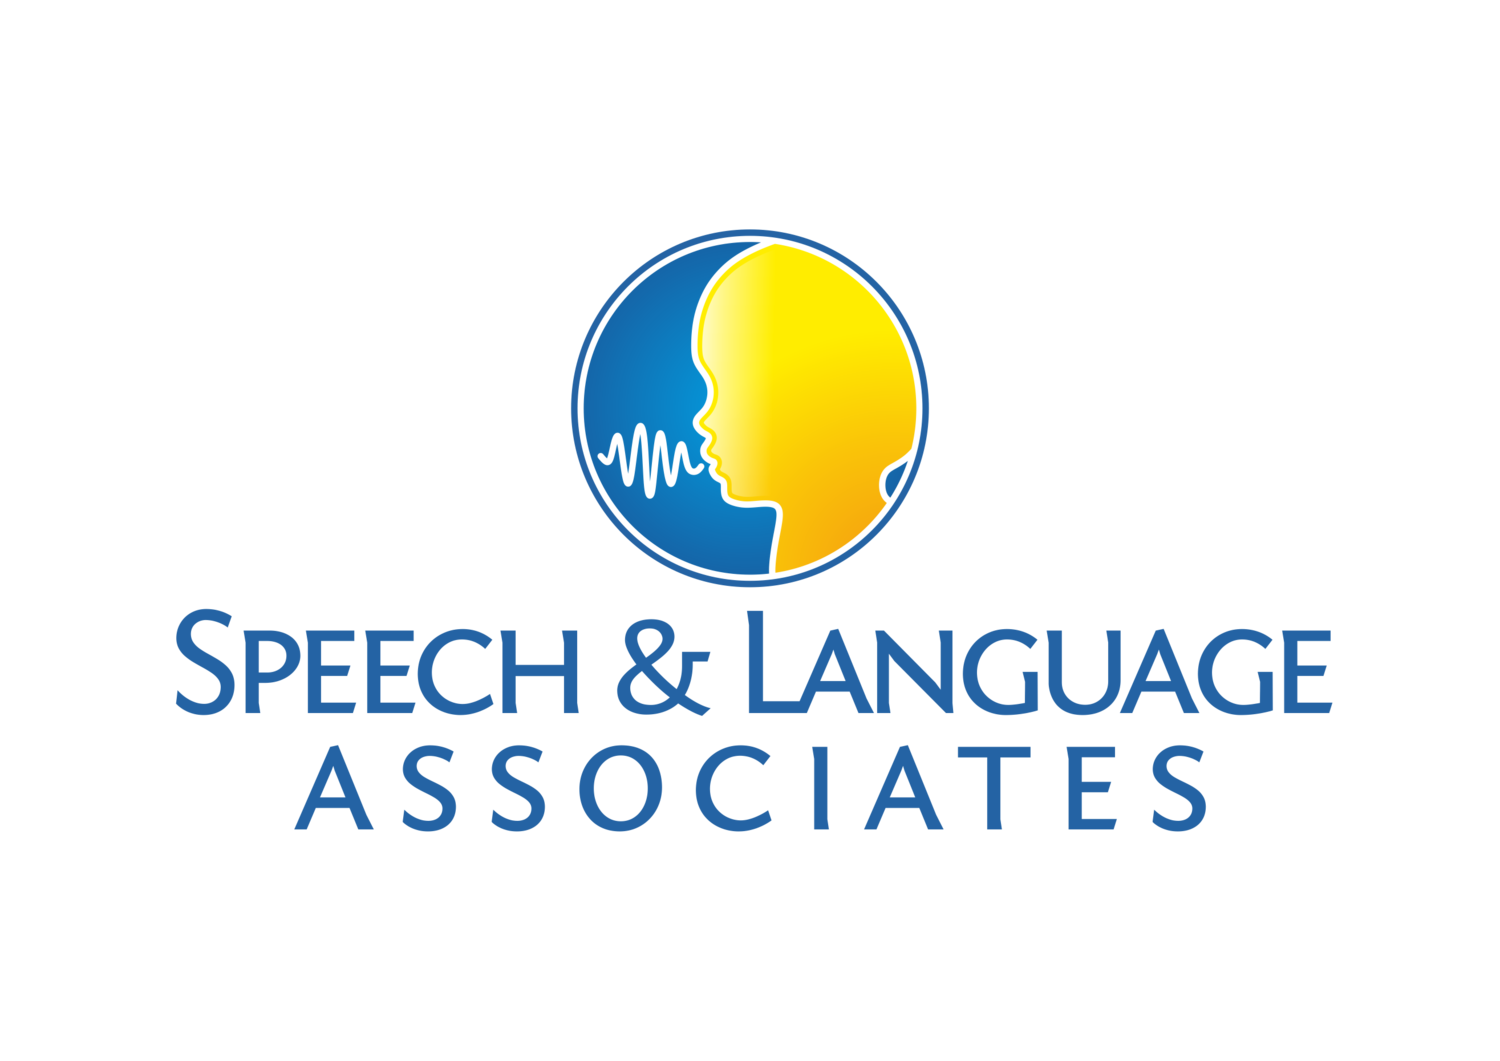 Speech & Language Associates | Dayton, Kettering, Beavercreek, Centerville and Greater Miami Valley area